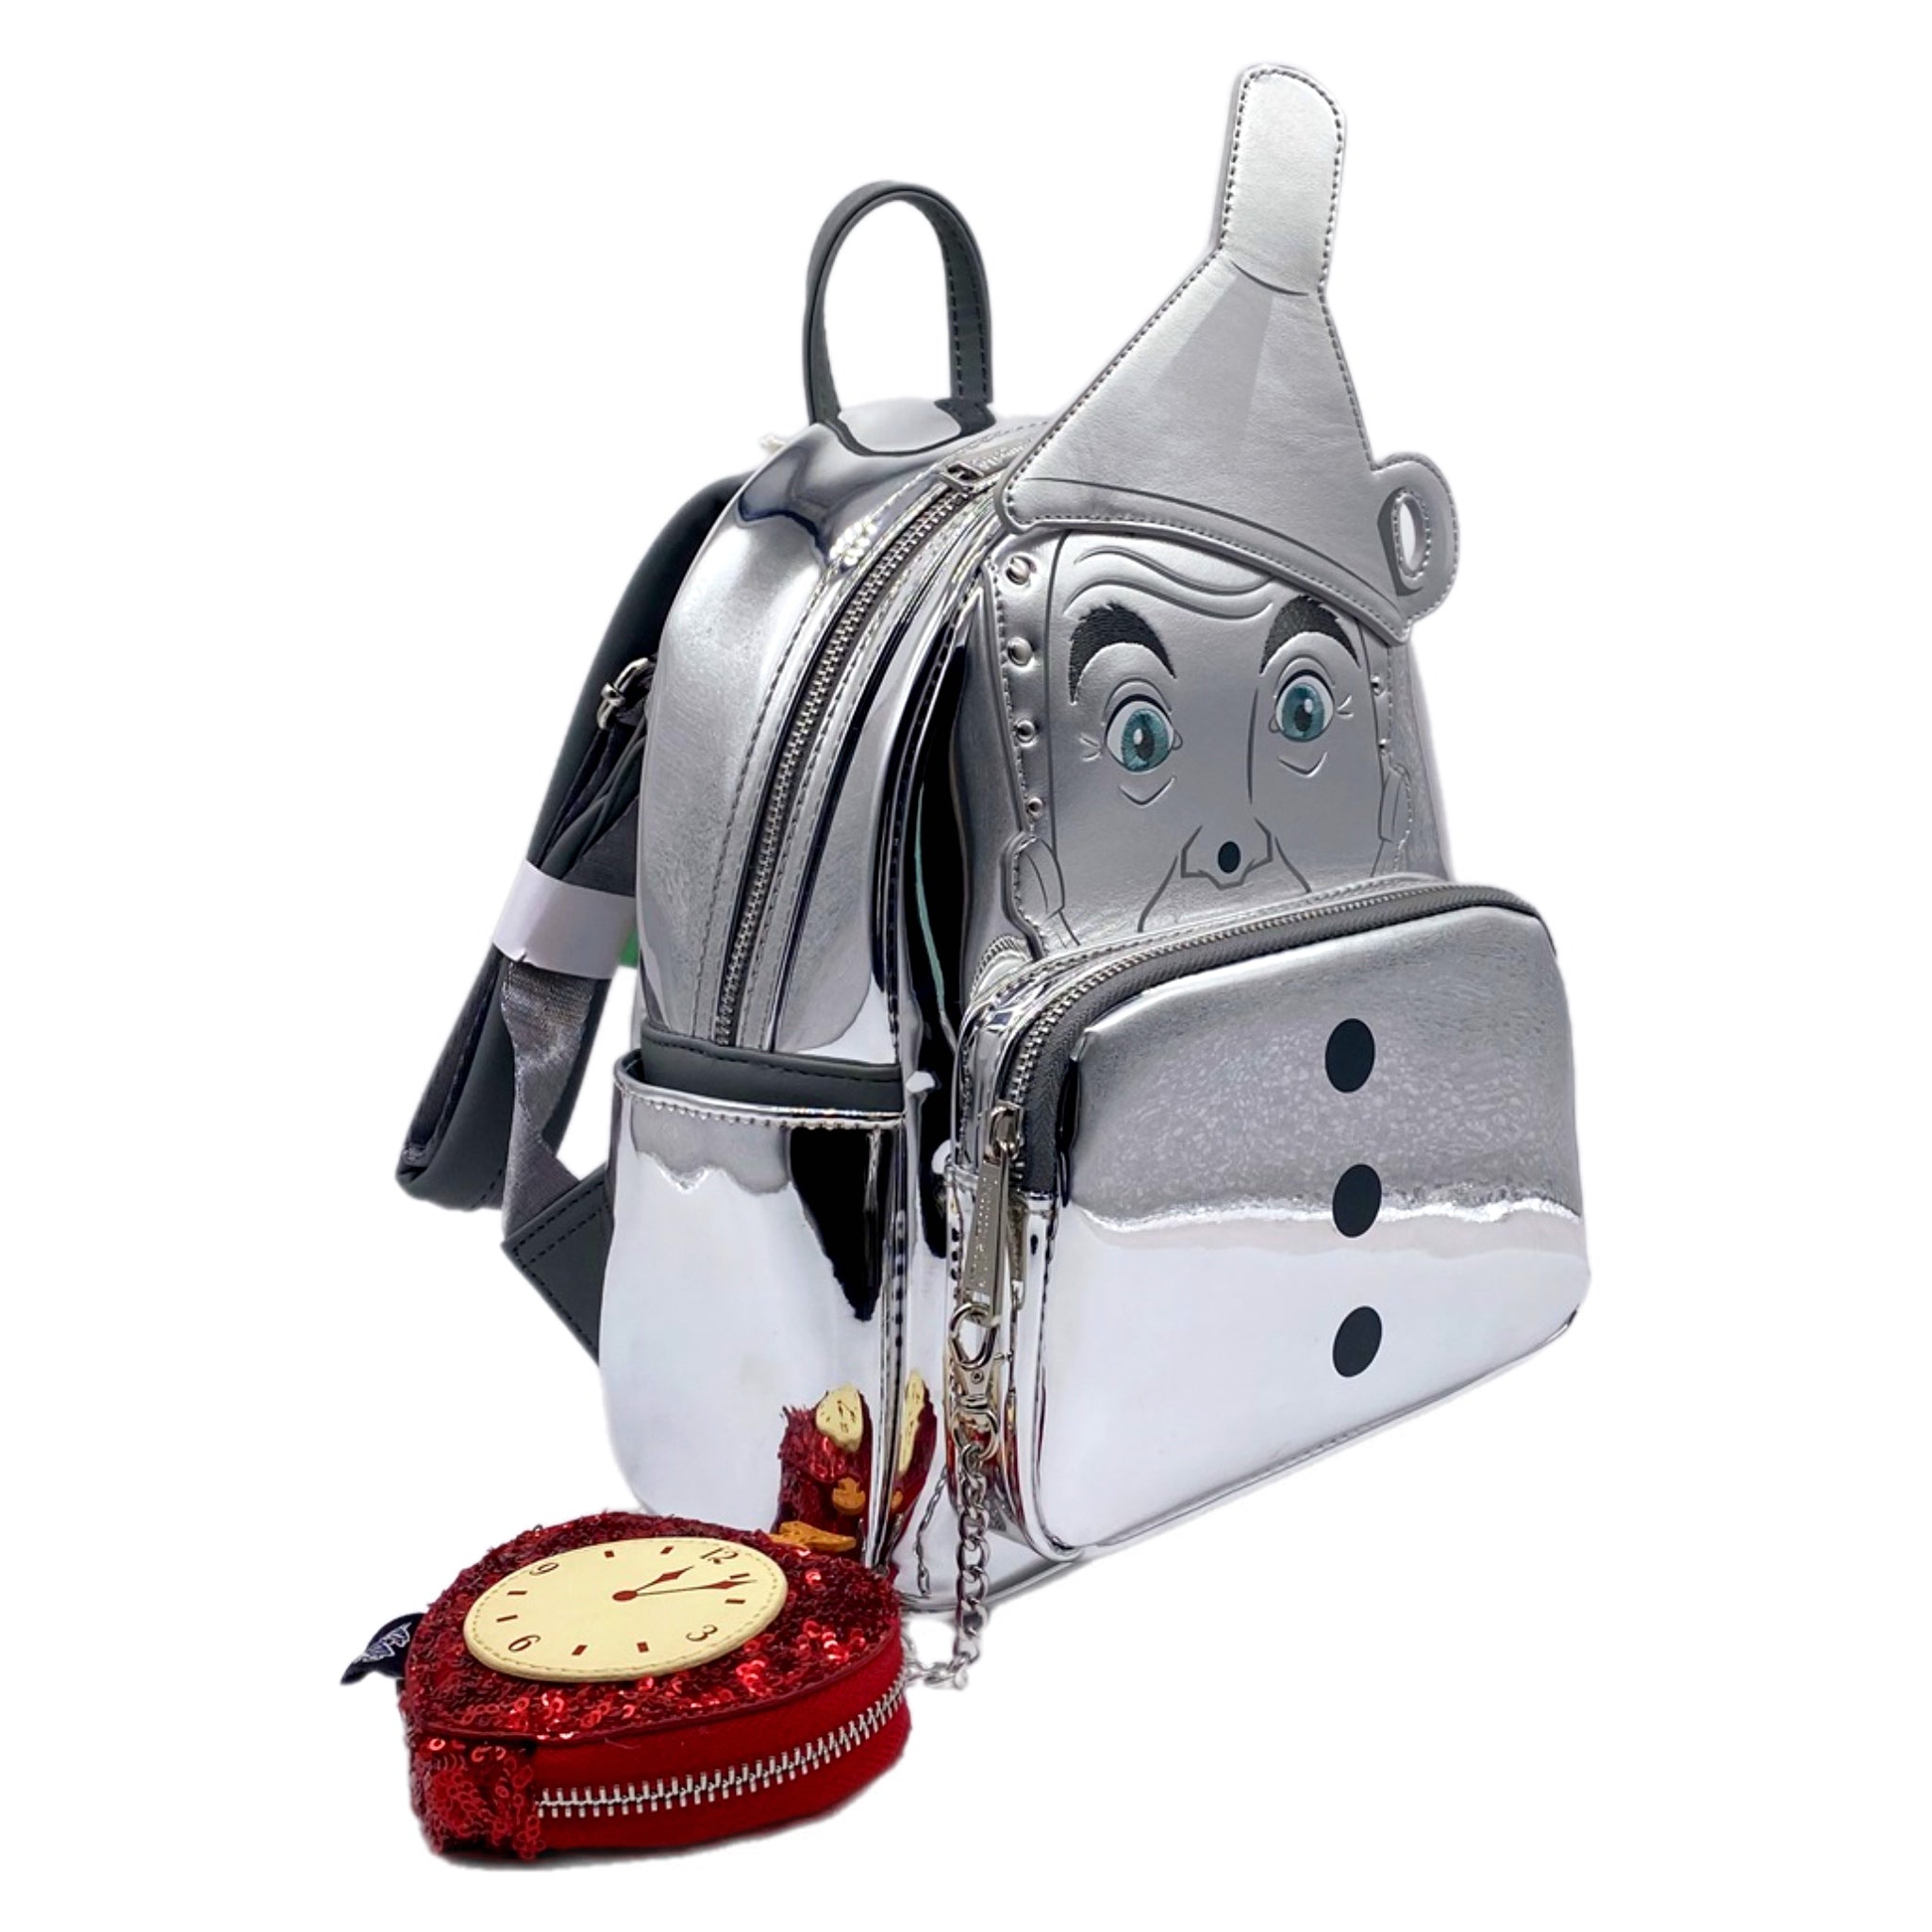 Wizard of Oz Handbag Purse Black & White Rhinestone Accent w/ Matching  Wallet | eBay